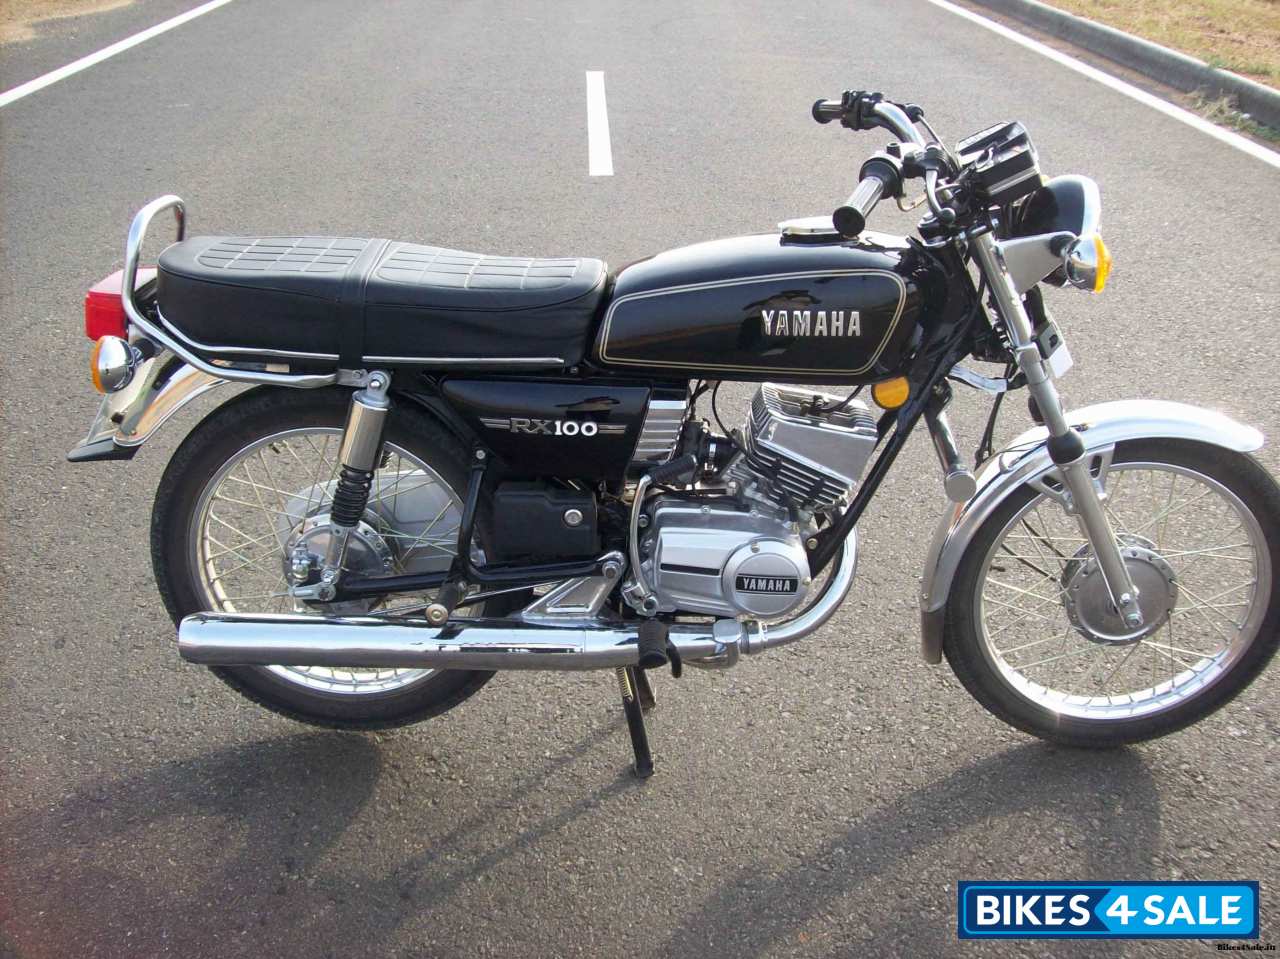 Yamaha Rx 100 New Bike Price In Andhra Pradesh لم يسبق له مثيل